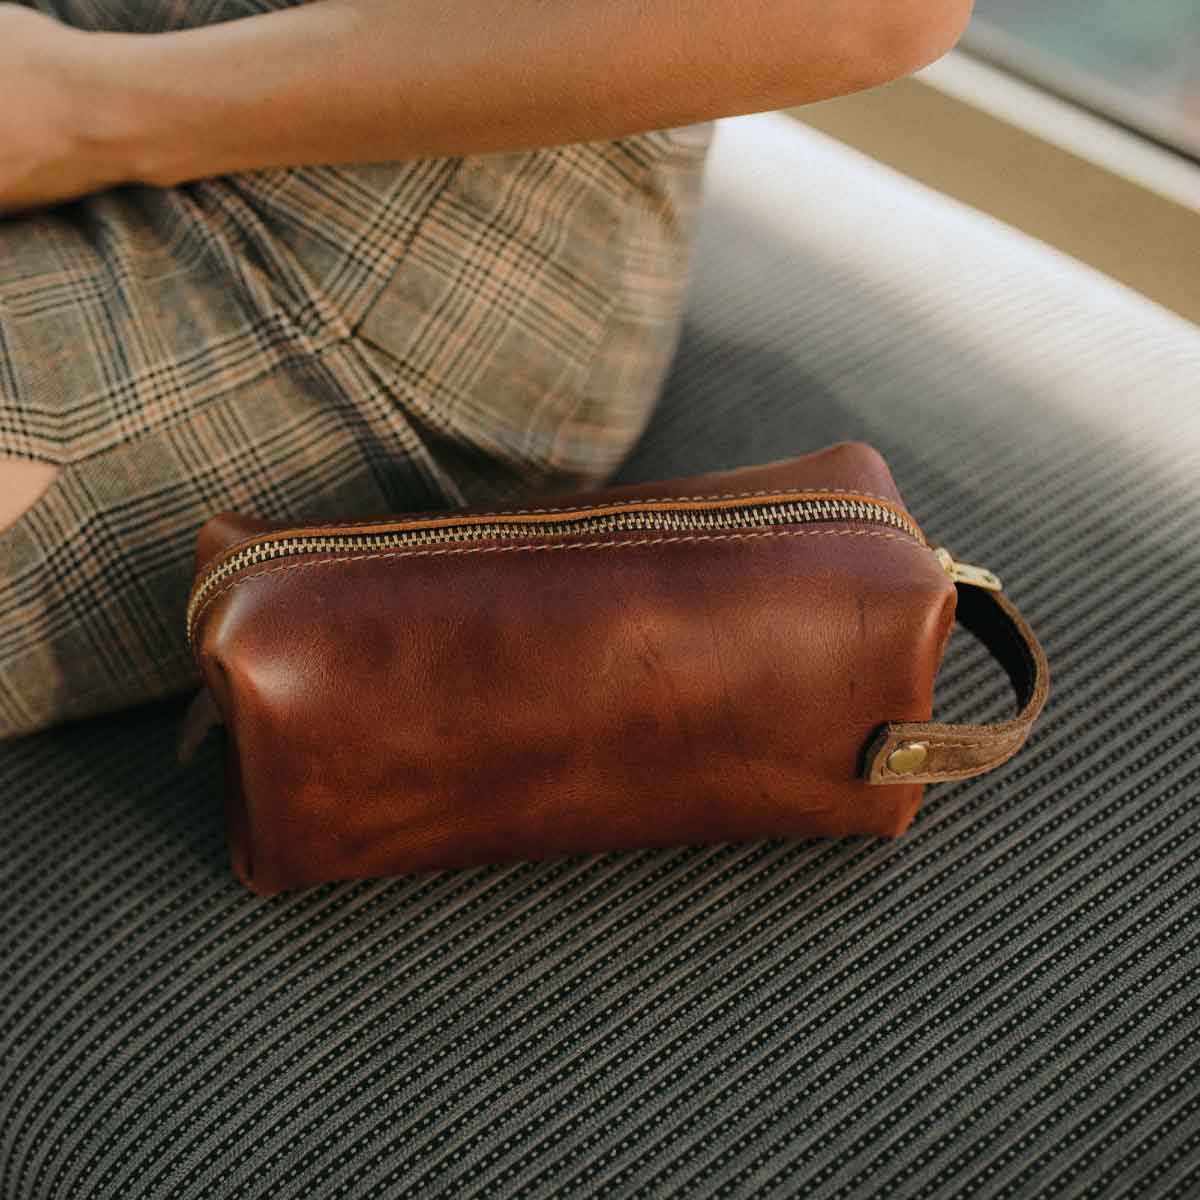 to shop / {purse diaries} apc half moon bag review